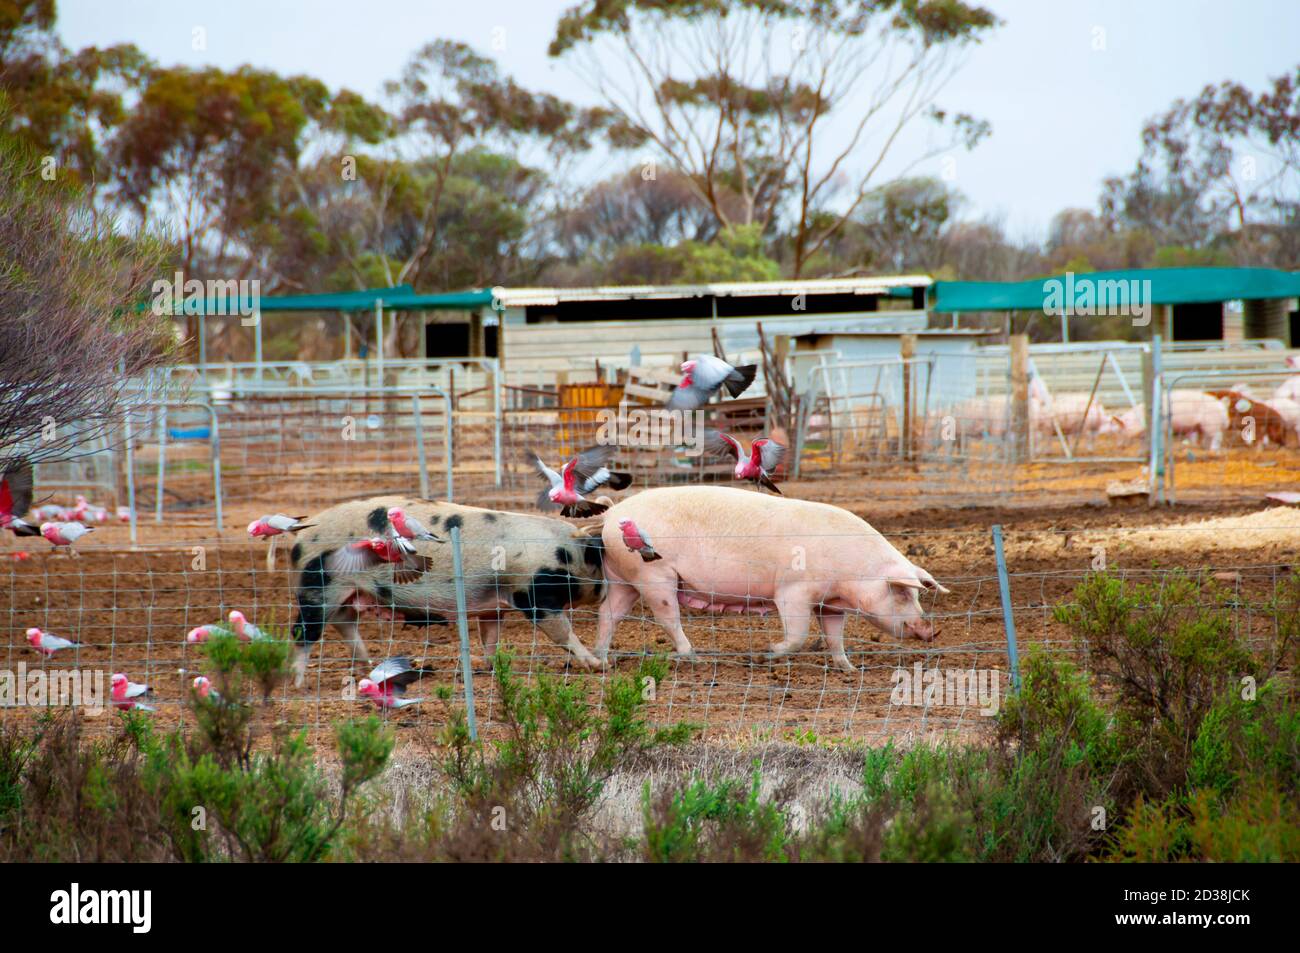 Free Range Pork Farm in the Field Stock Photo